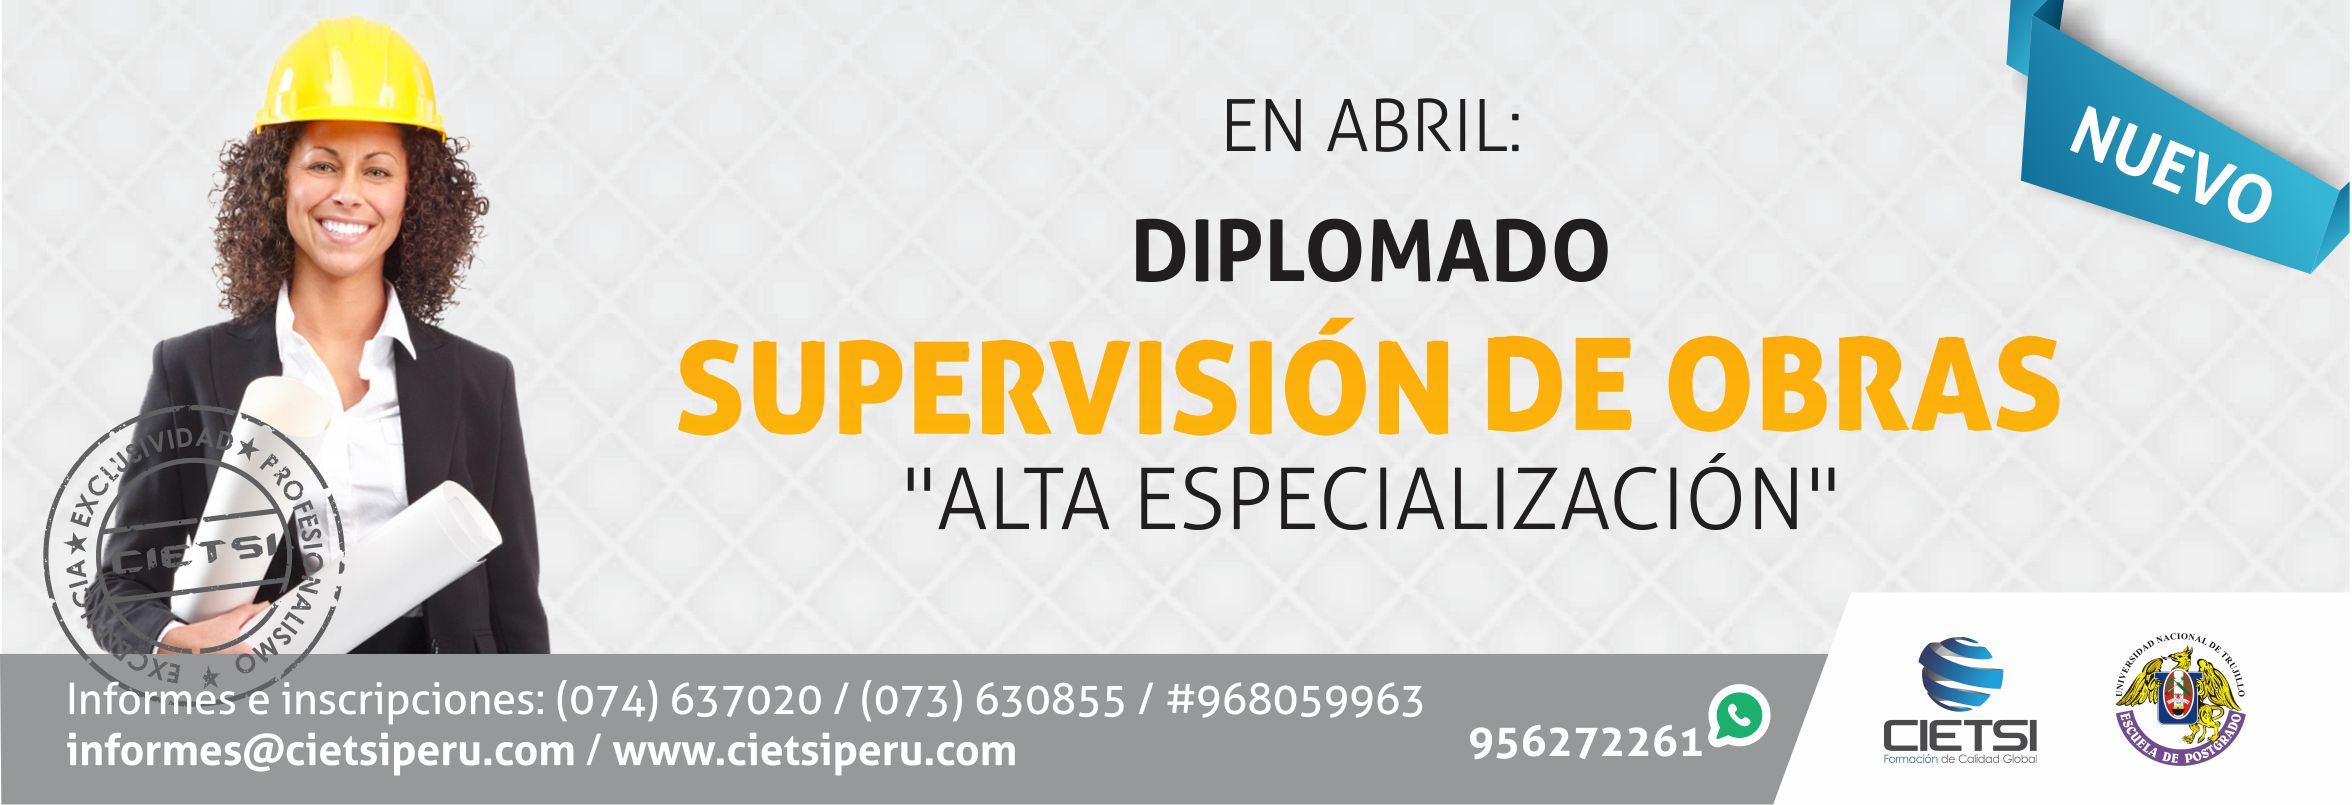 DIPLOMADO EN SUPERVISIÓN DE OBRAS 2016 - ALTA ESPECIALIZACIÓN